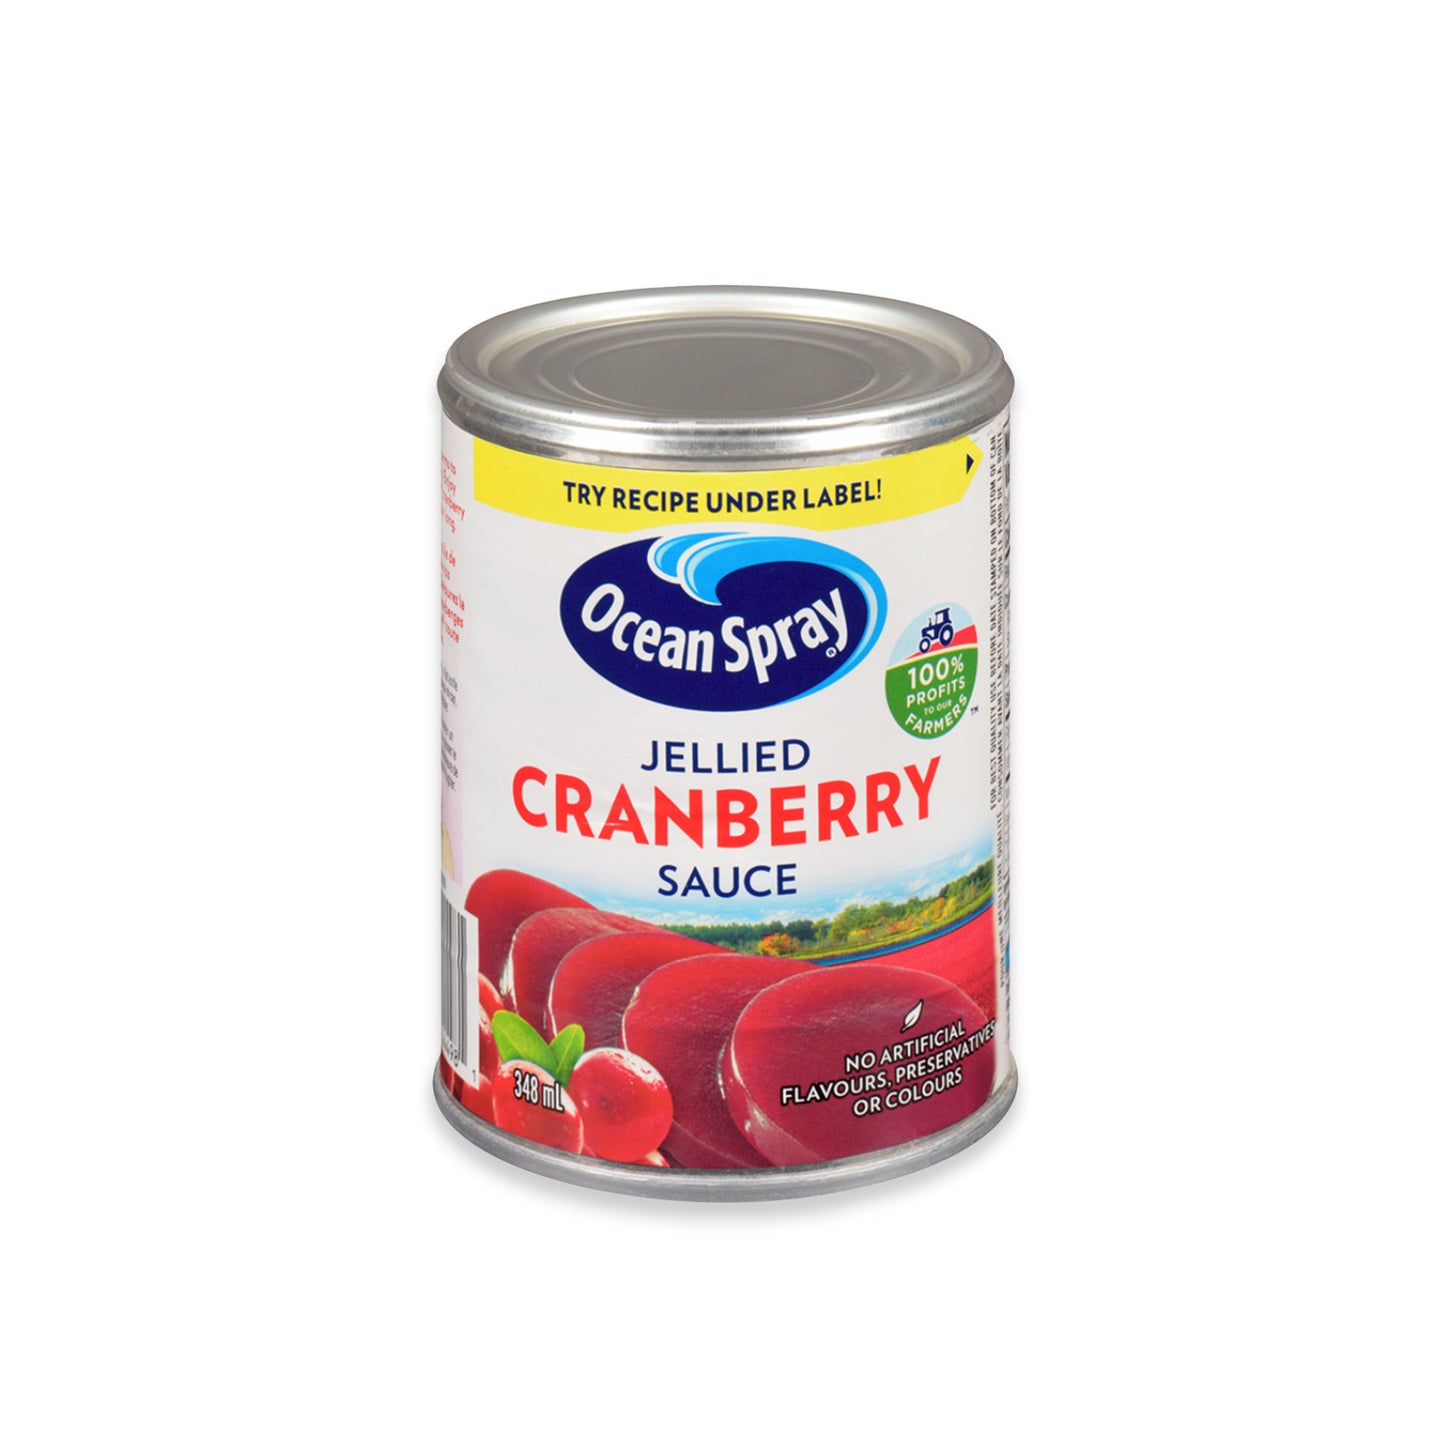 Cranberry Sauce - Ocean Spray (Jellied)